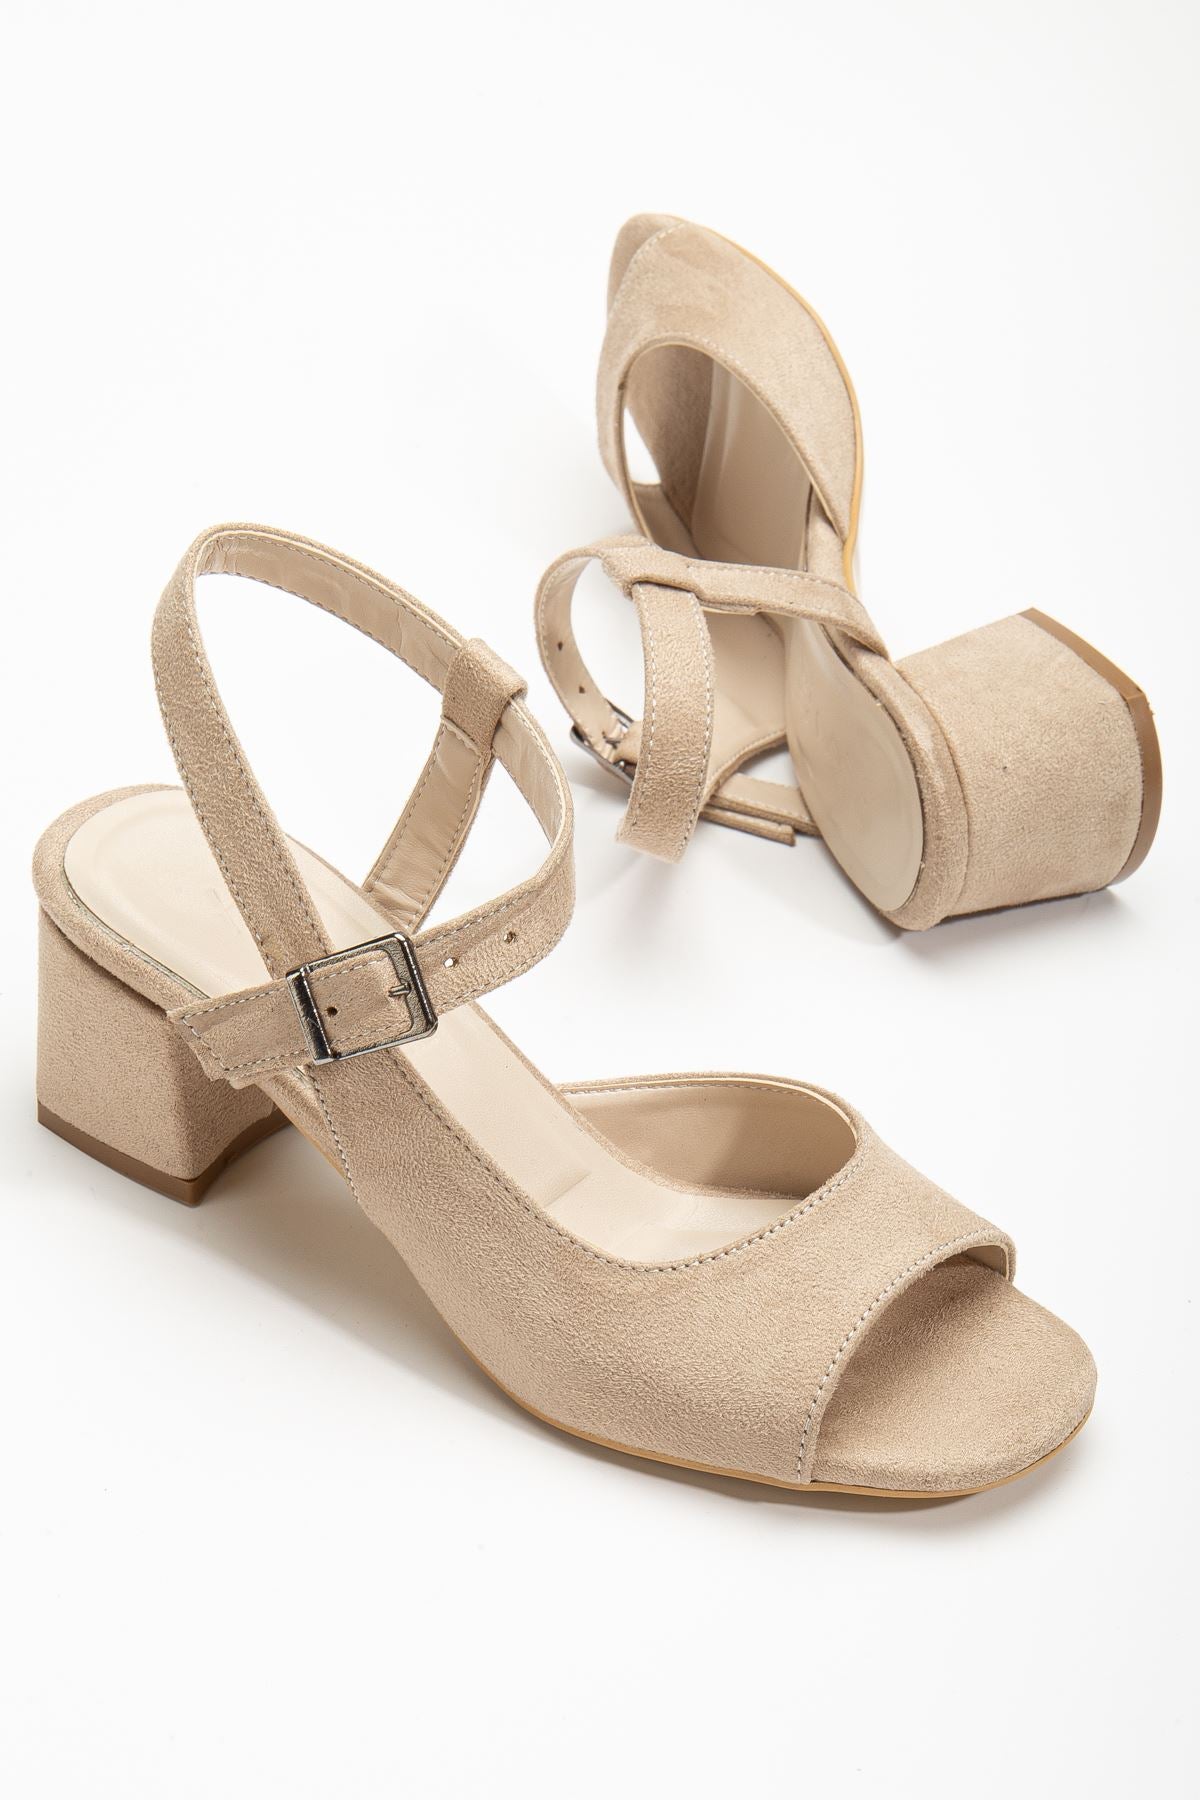 Keri Heeled Cream Suede Blunt Toe Women's Shoes - STREETMODE ™